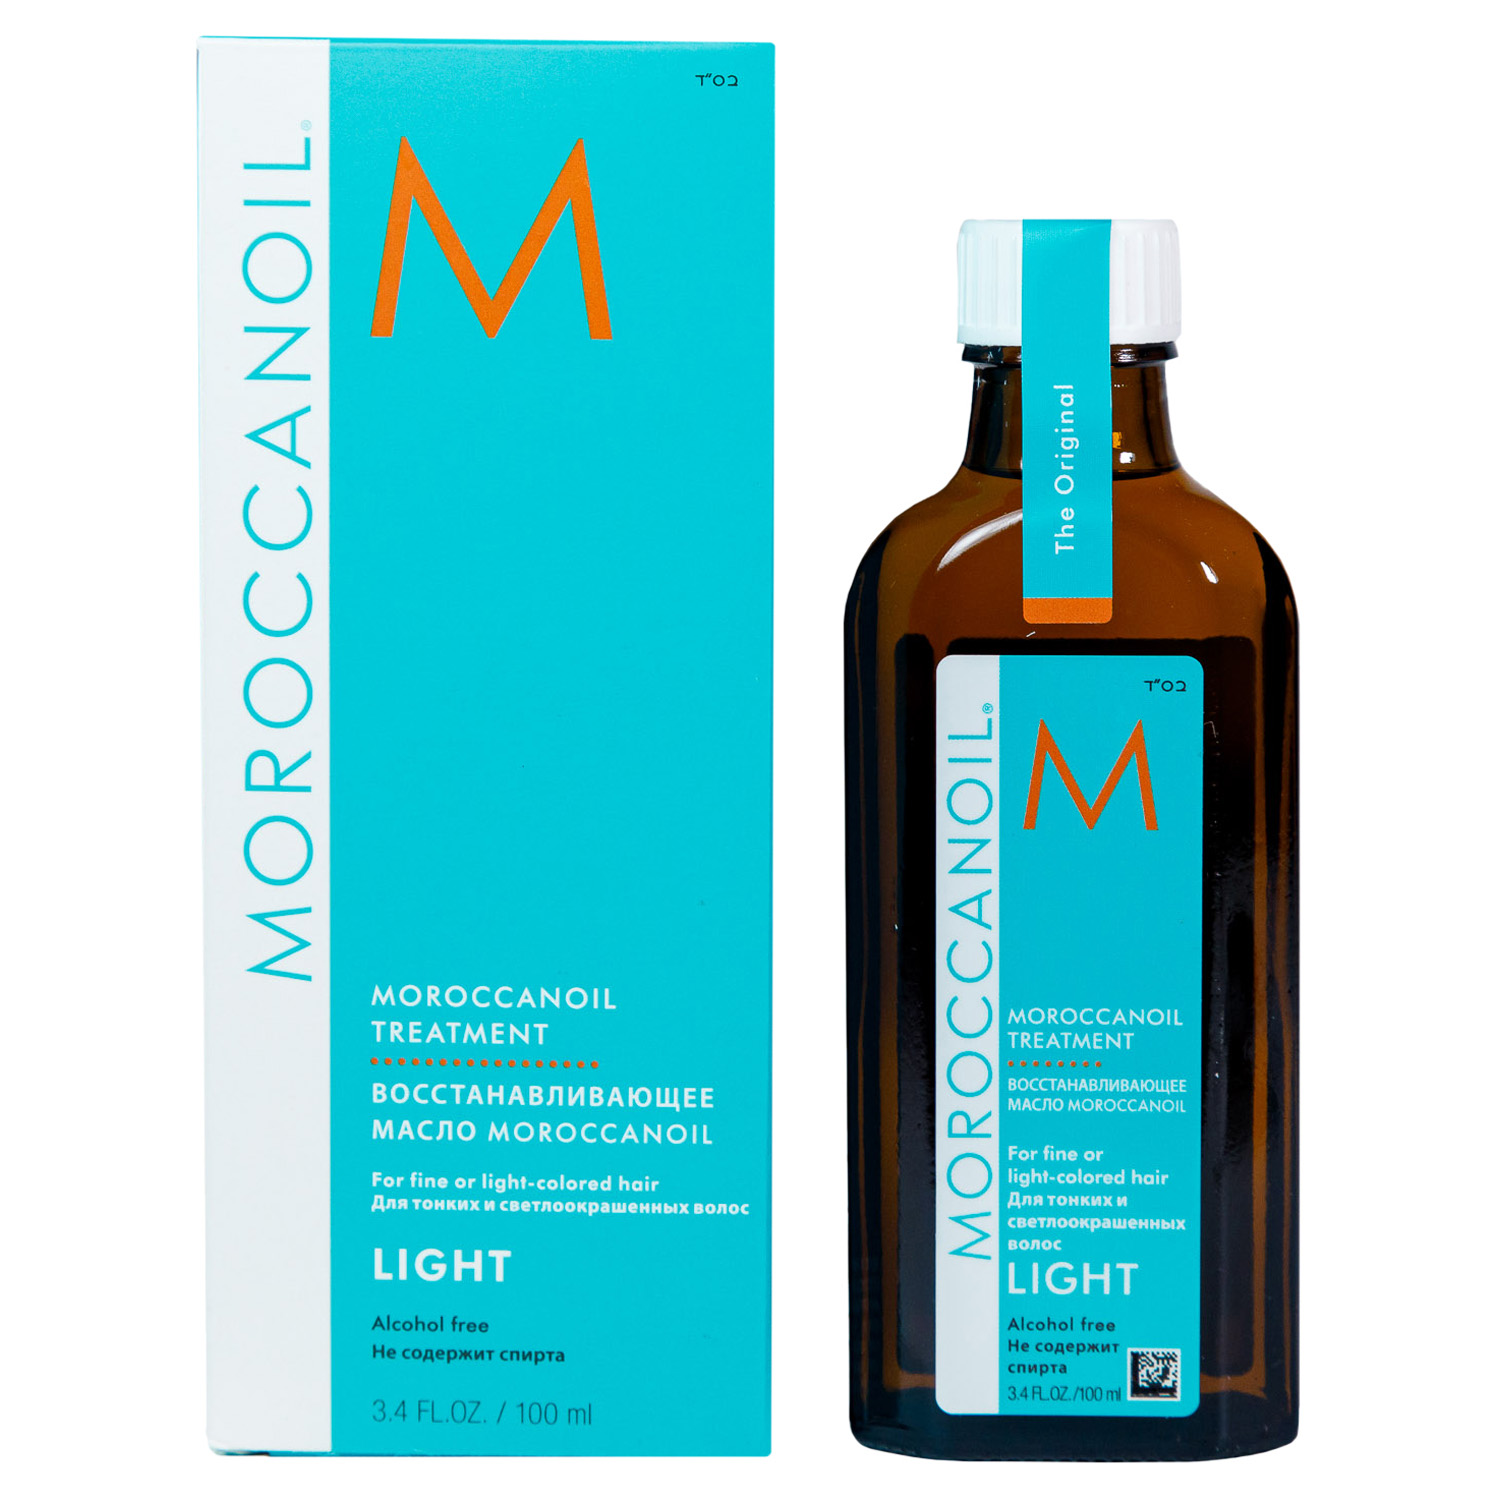 Moroccanoil Восстанавливающее масло для тонких светлых волос, 100 мл (Moroccanoil, Treatment)